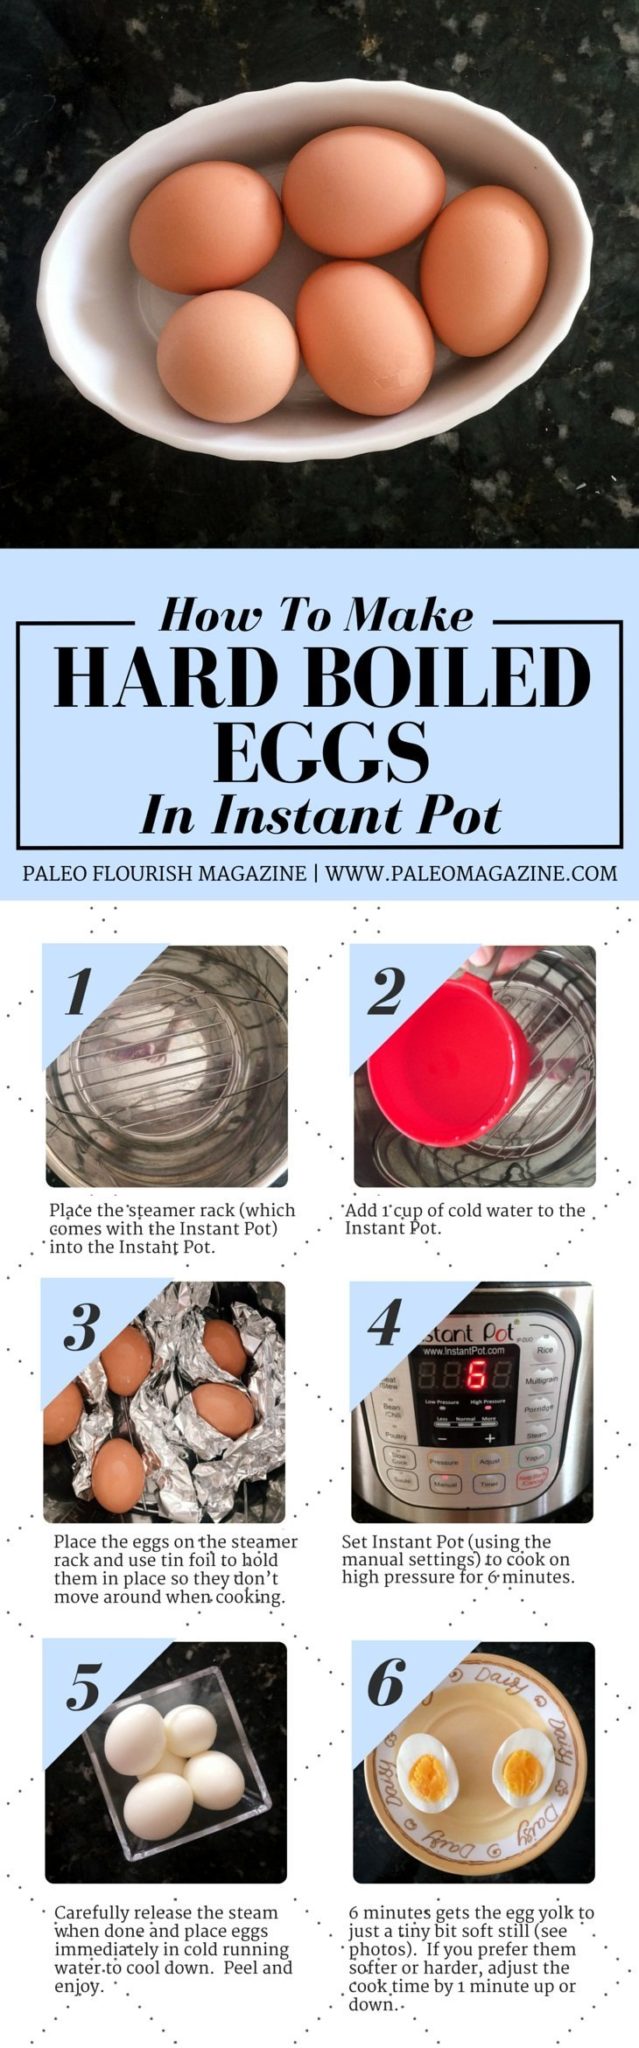 How To Make Hard Boiled Eggs In Instant Pot #paleo #recipes #glutenfree https://paleoflourish.com/hard-boiled-eggs-instant-pot